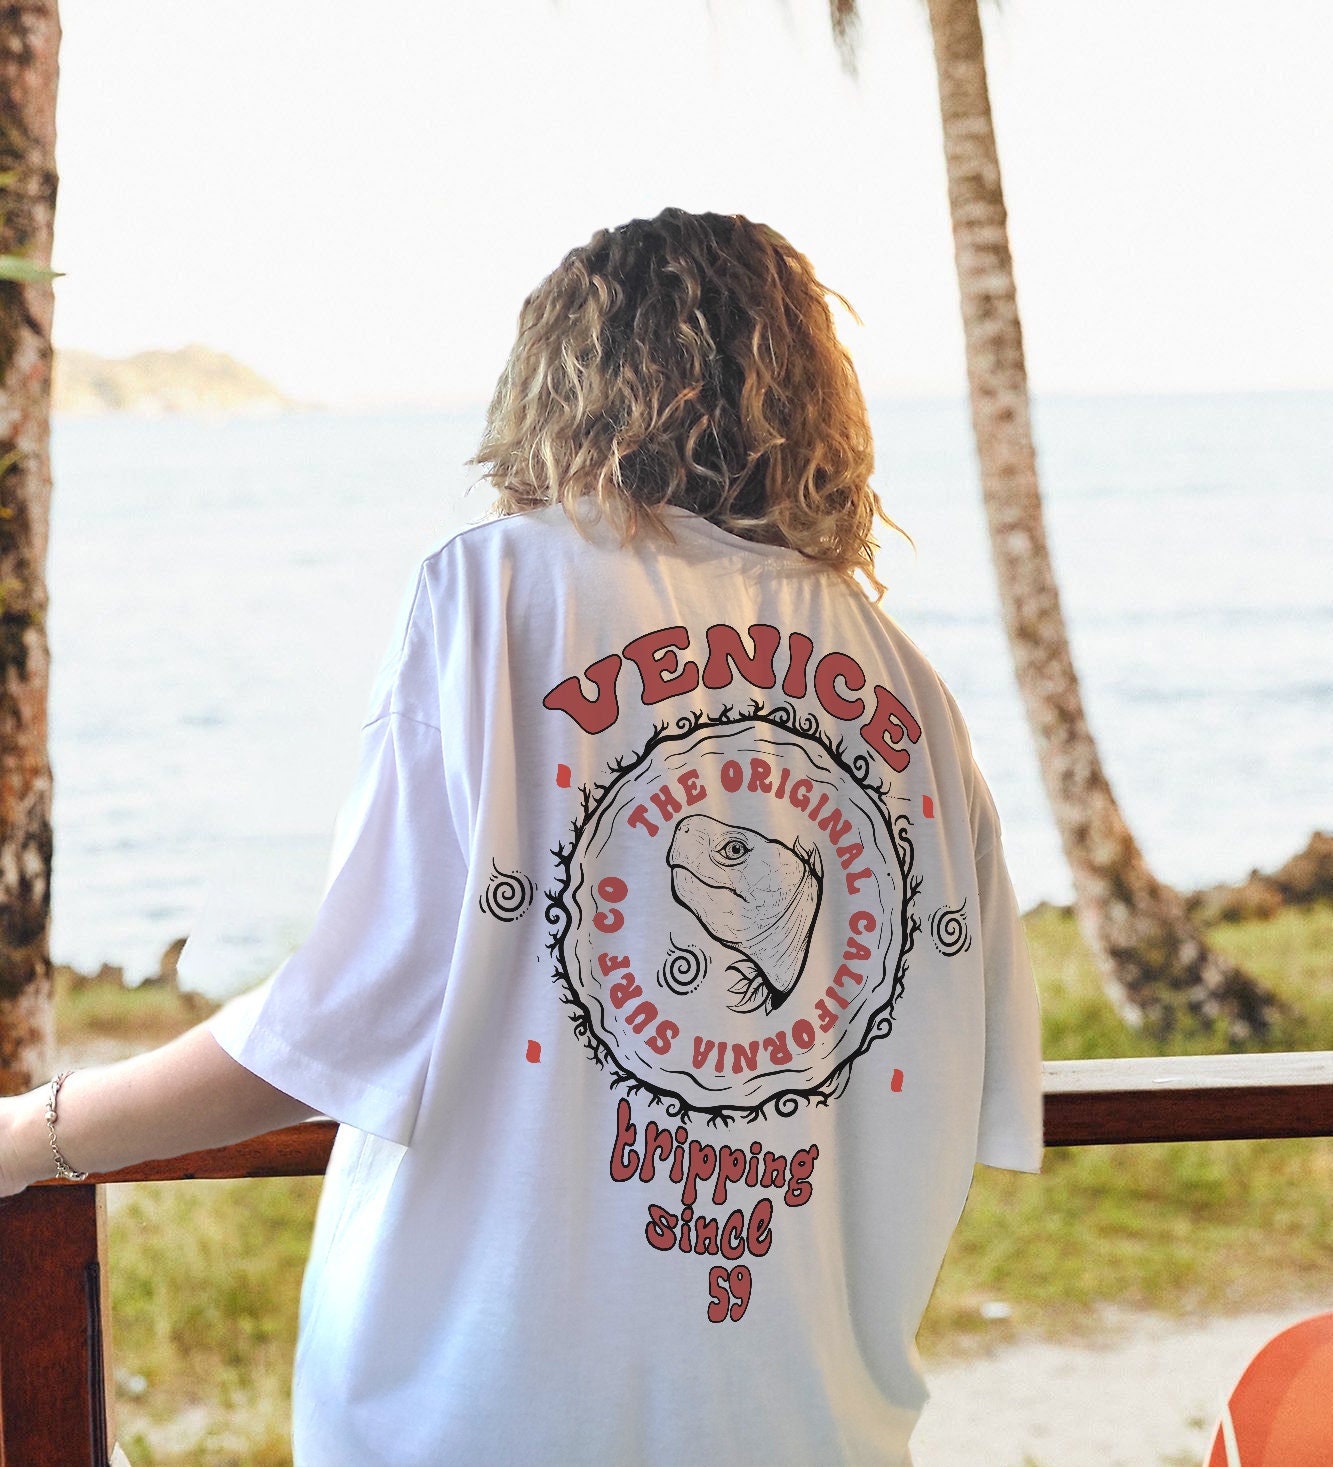 Beach Clothing for Woman Shirt Cali - Surf Cute Shirt Tee Surf Etsy Venice Shirt California